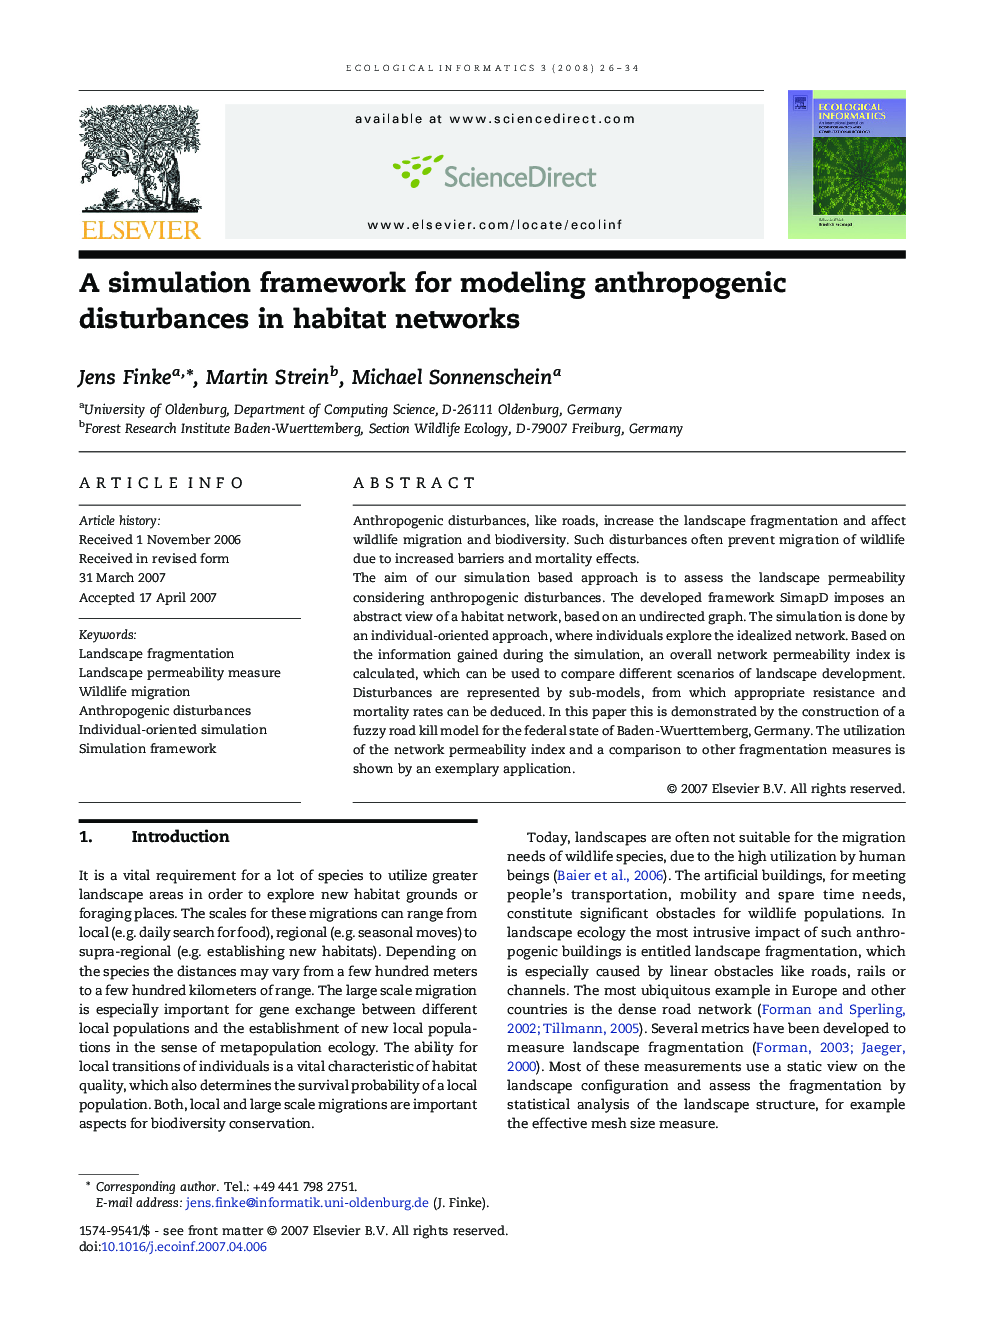 A simulation framework for modeling anthropogenic disturbances in habitat networks